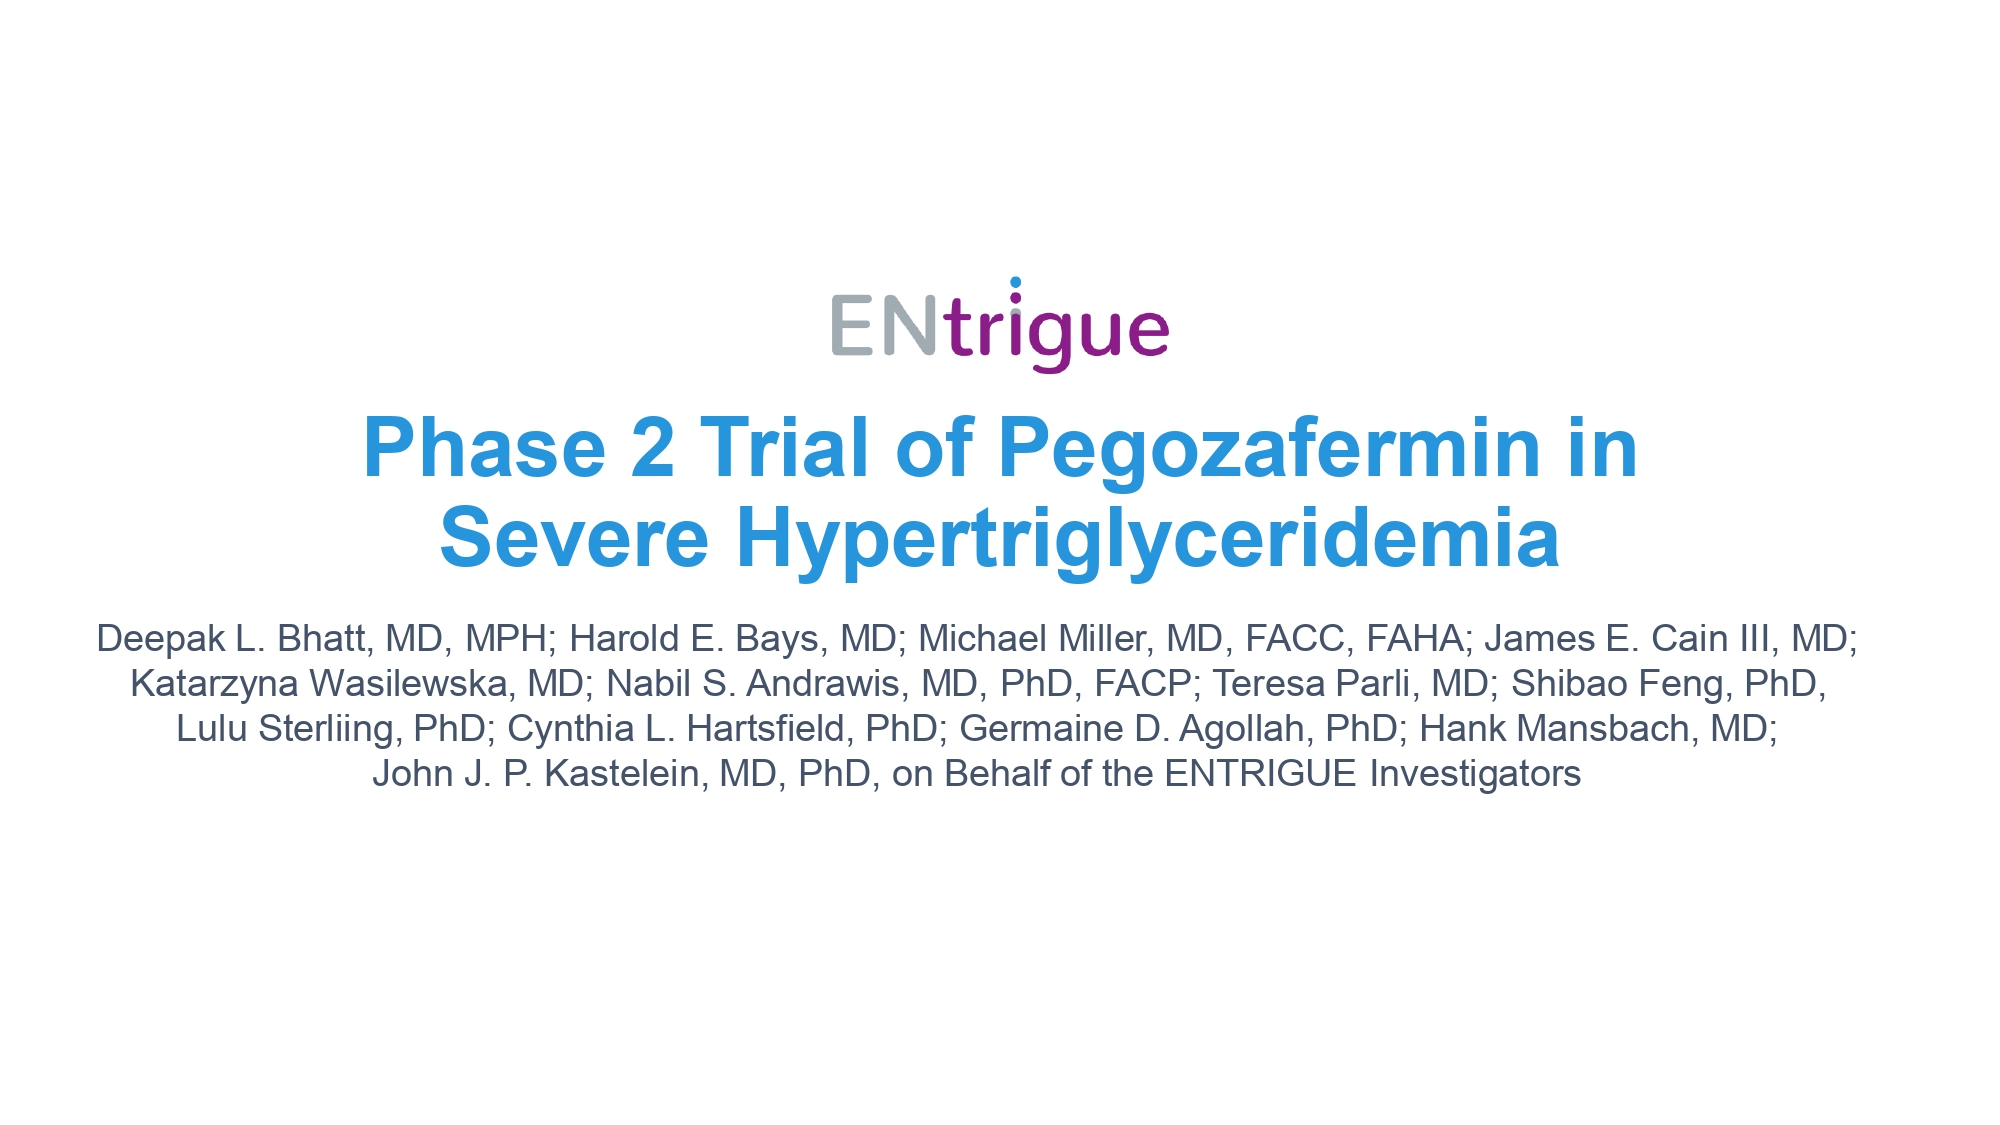 ESC 2022 presentation: Phase 2 trial of pegozafermin in severe hypertriglyceridemia.